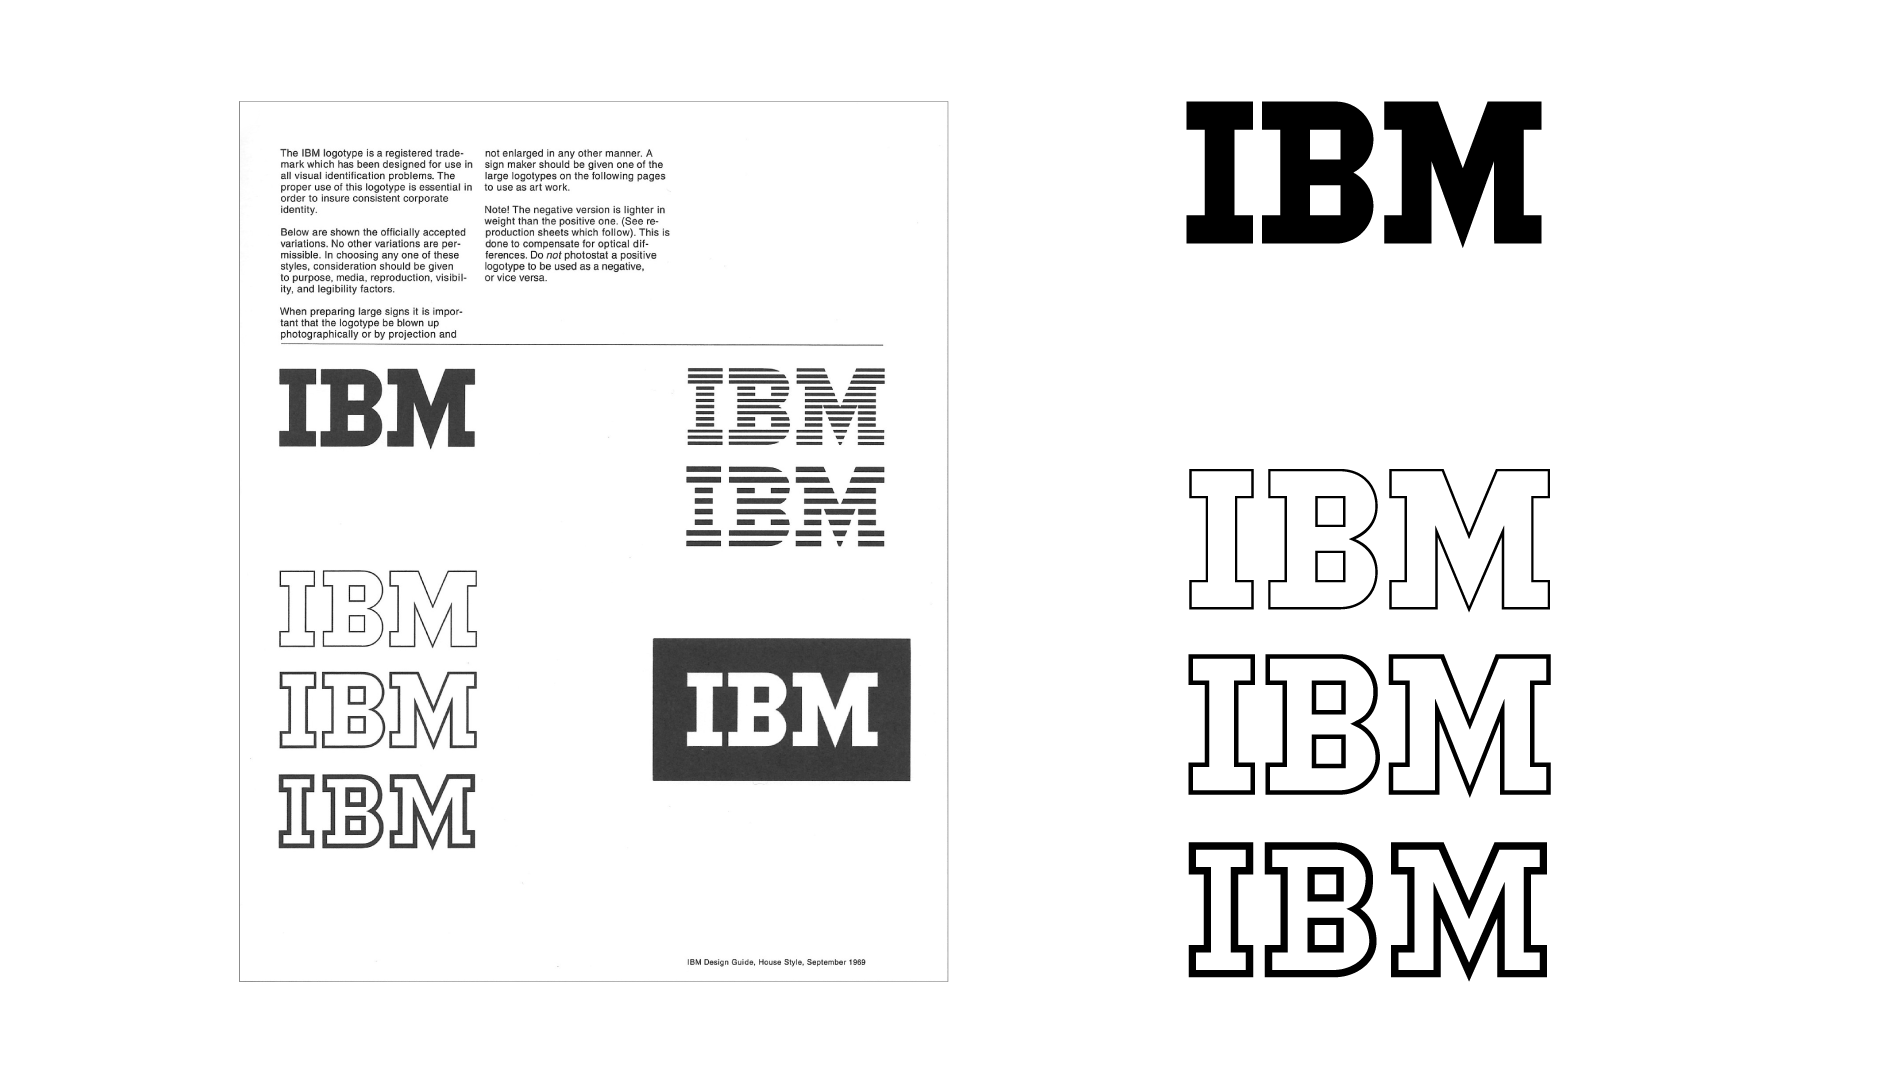 IBMアウトラインロゴタイプの各部詳細比較